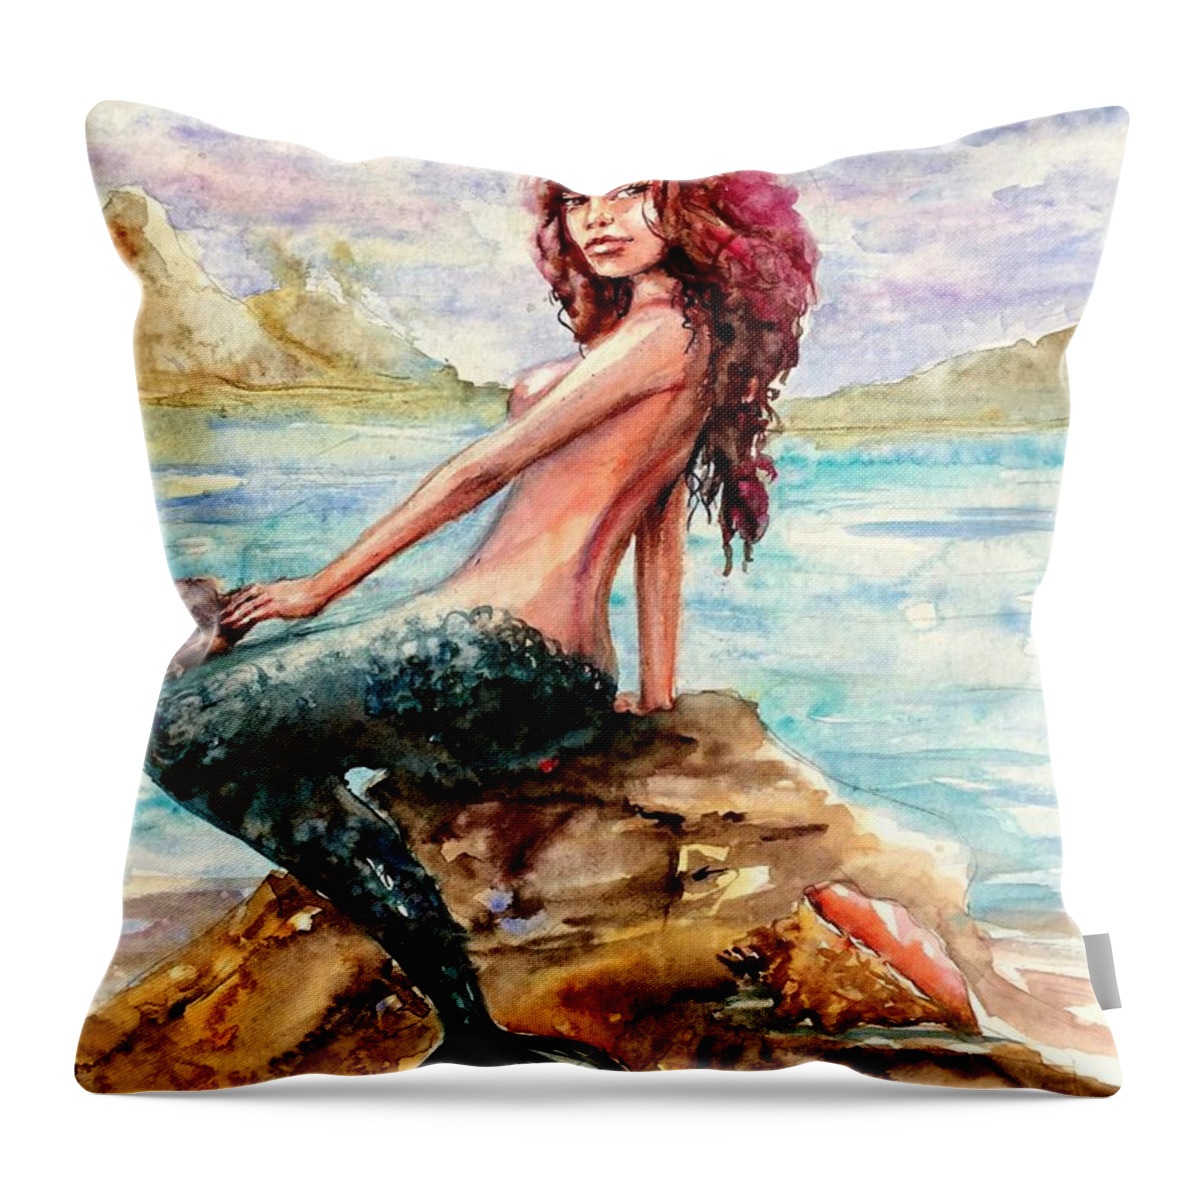 Mermaid Throw Pillow featuring the painting Mermaid 4 by Katerina Kovatcheva